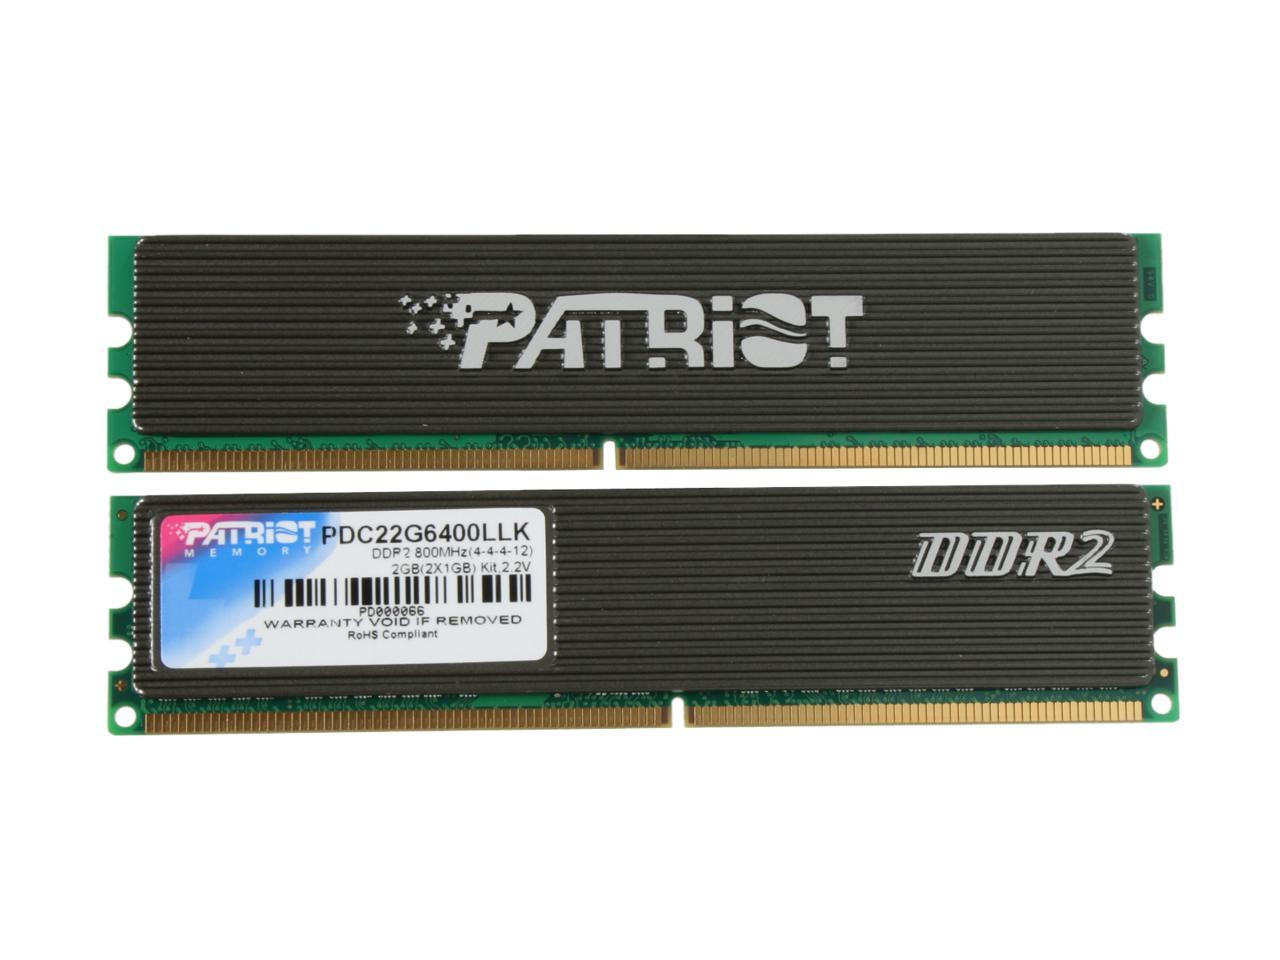 Patriot Extreme Performance 4GB (2 x 2GB) 240-Pin DDR2 